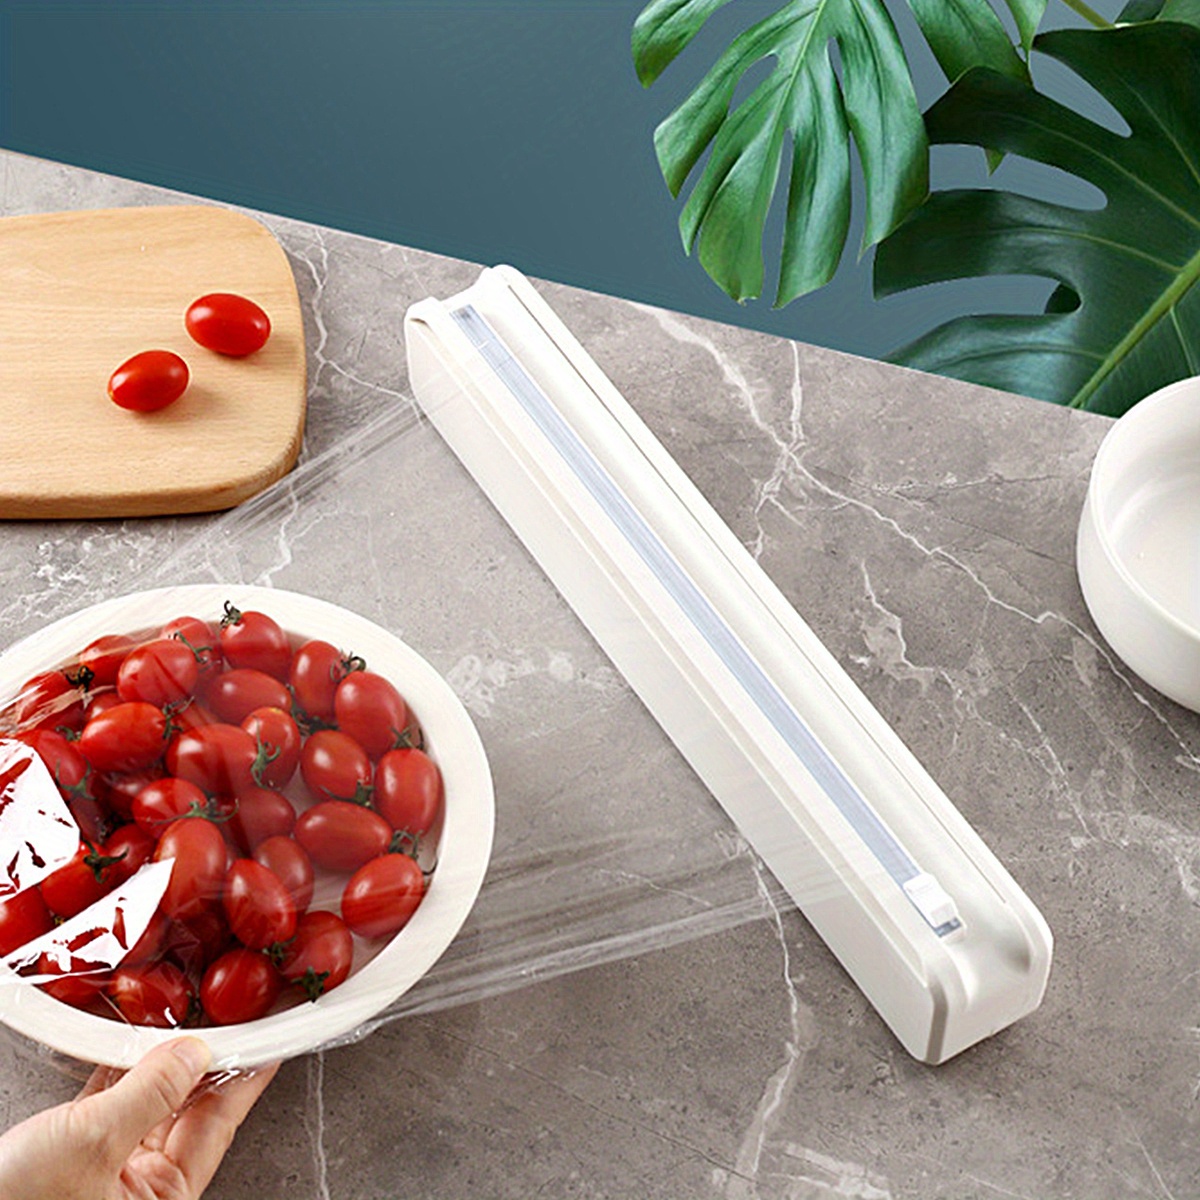 Adjustable Plastic Wrap Dispenser With Slide Cutter - Reusable